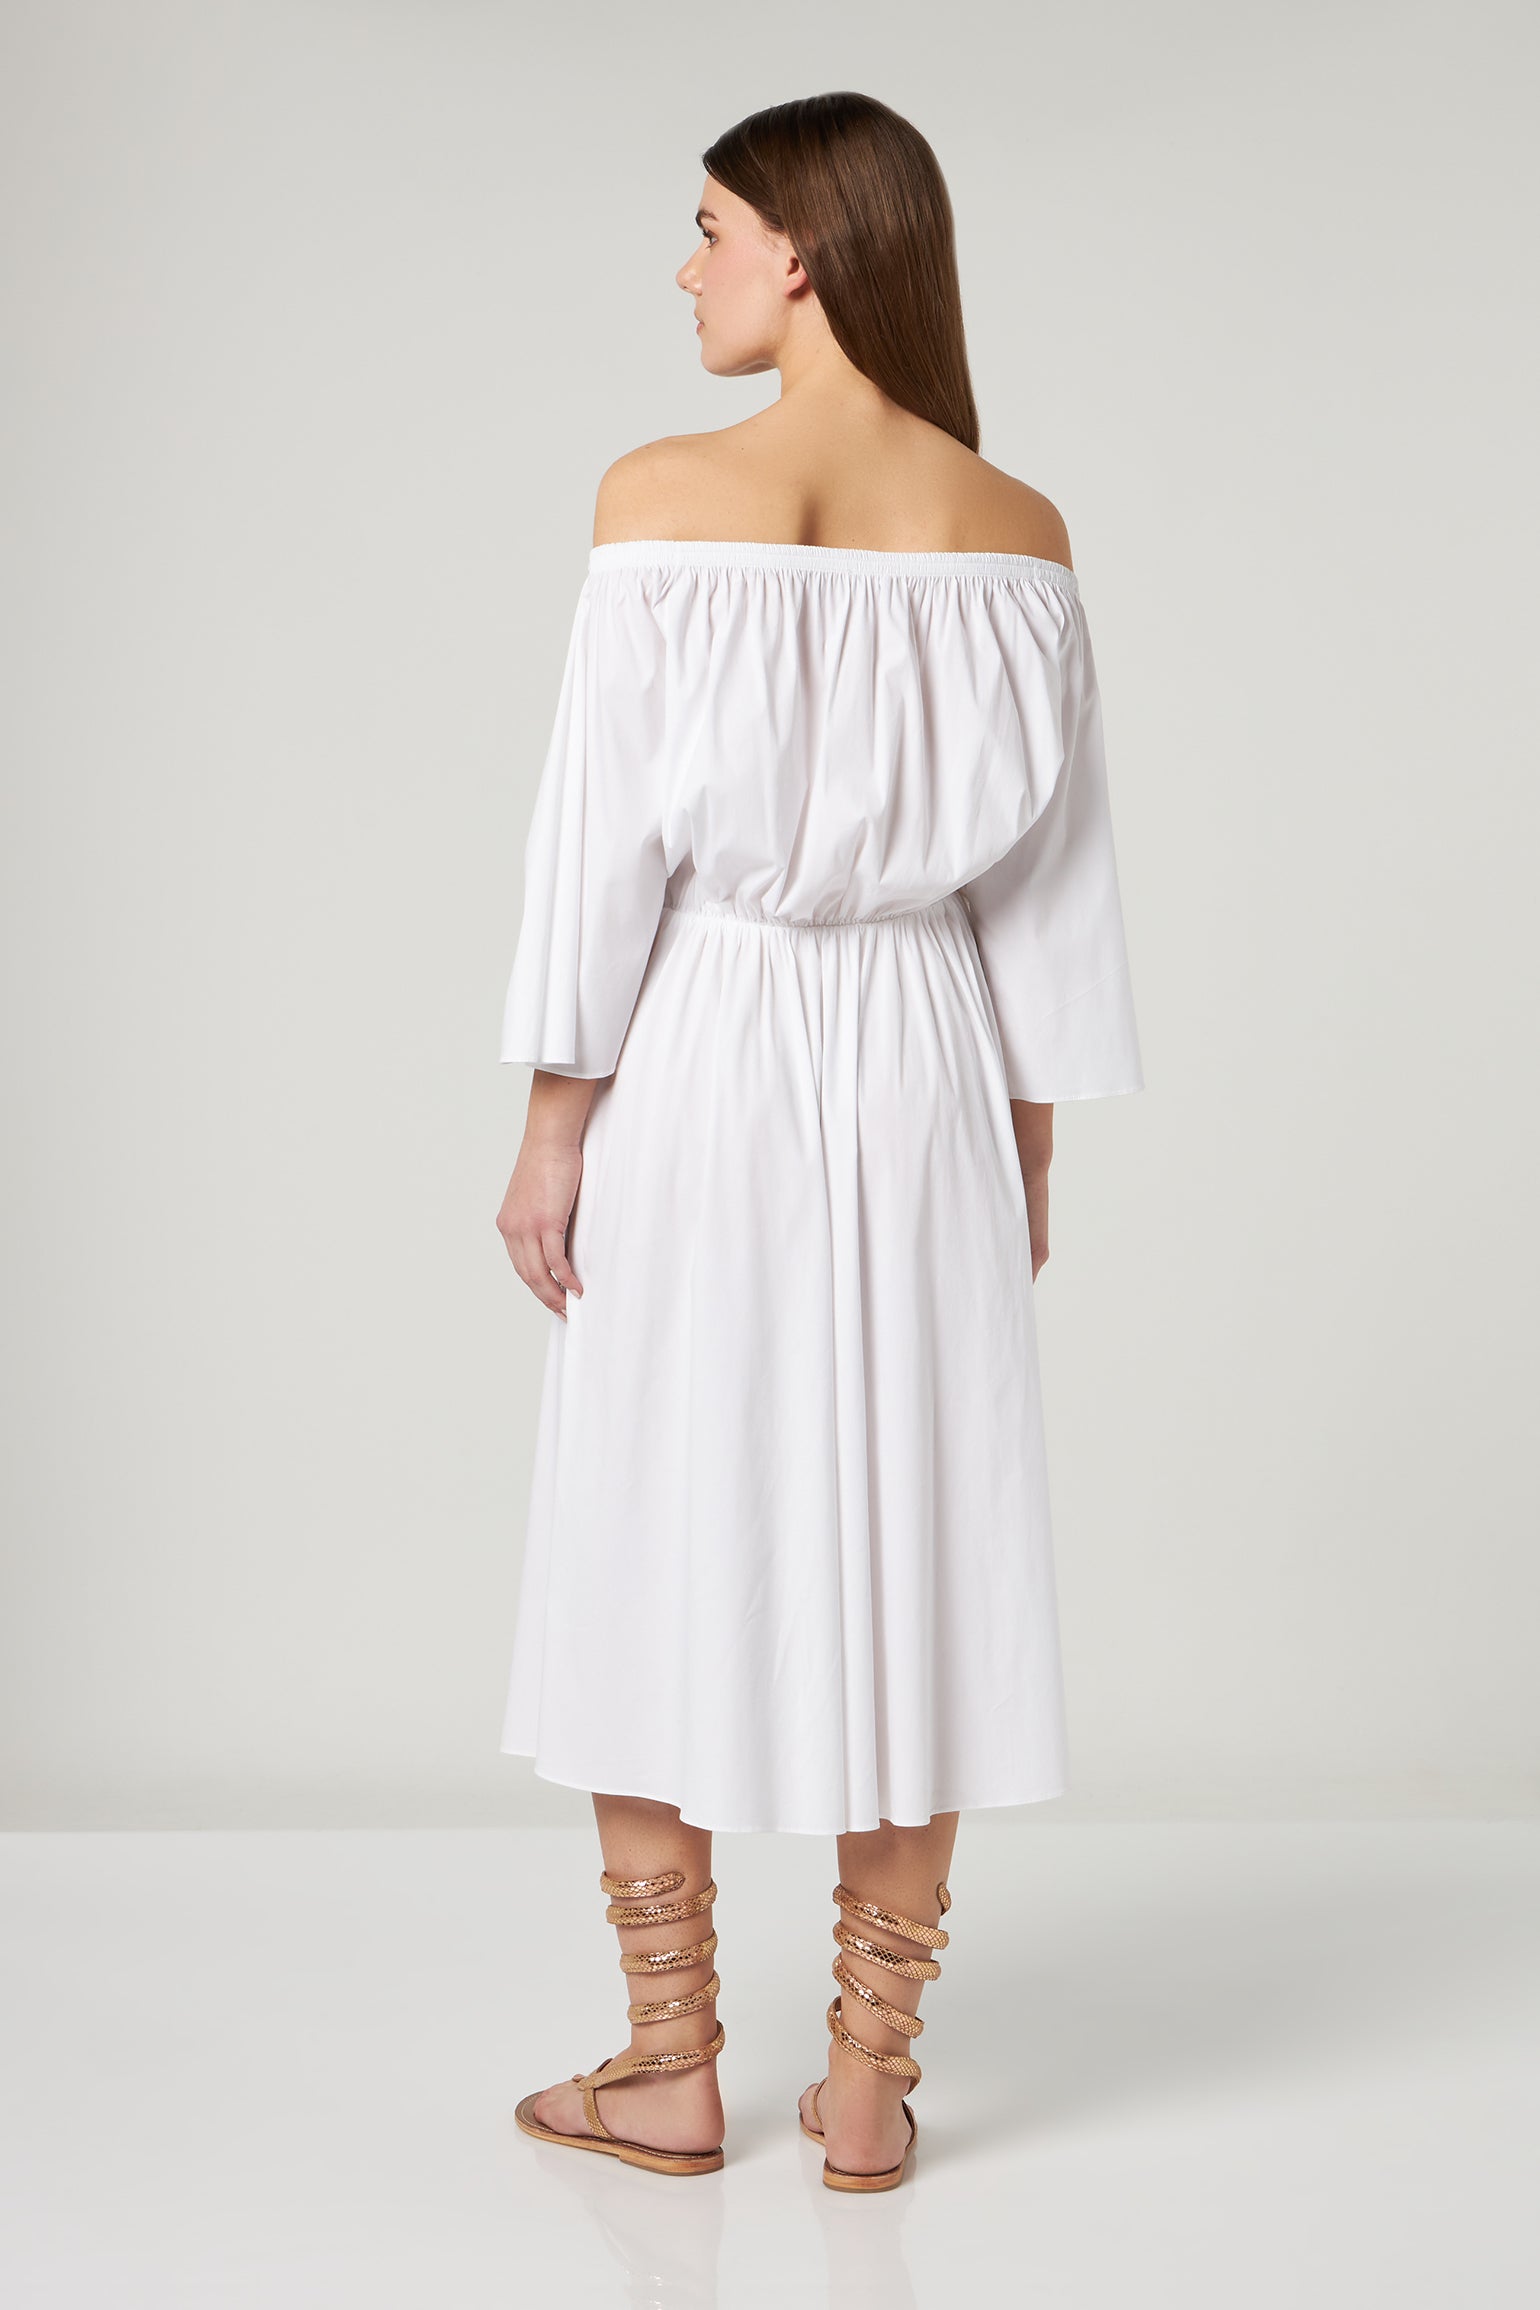 PATRIZIA PEPE Langes schulterfreies weißes Kleid